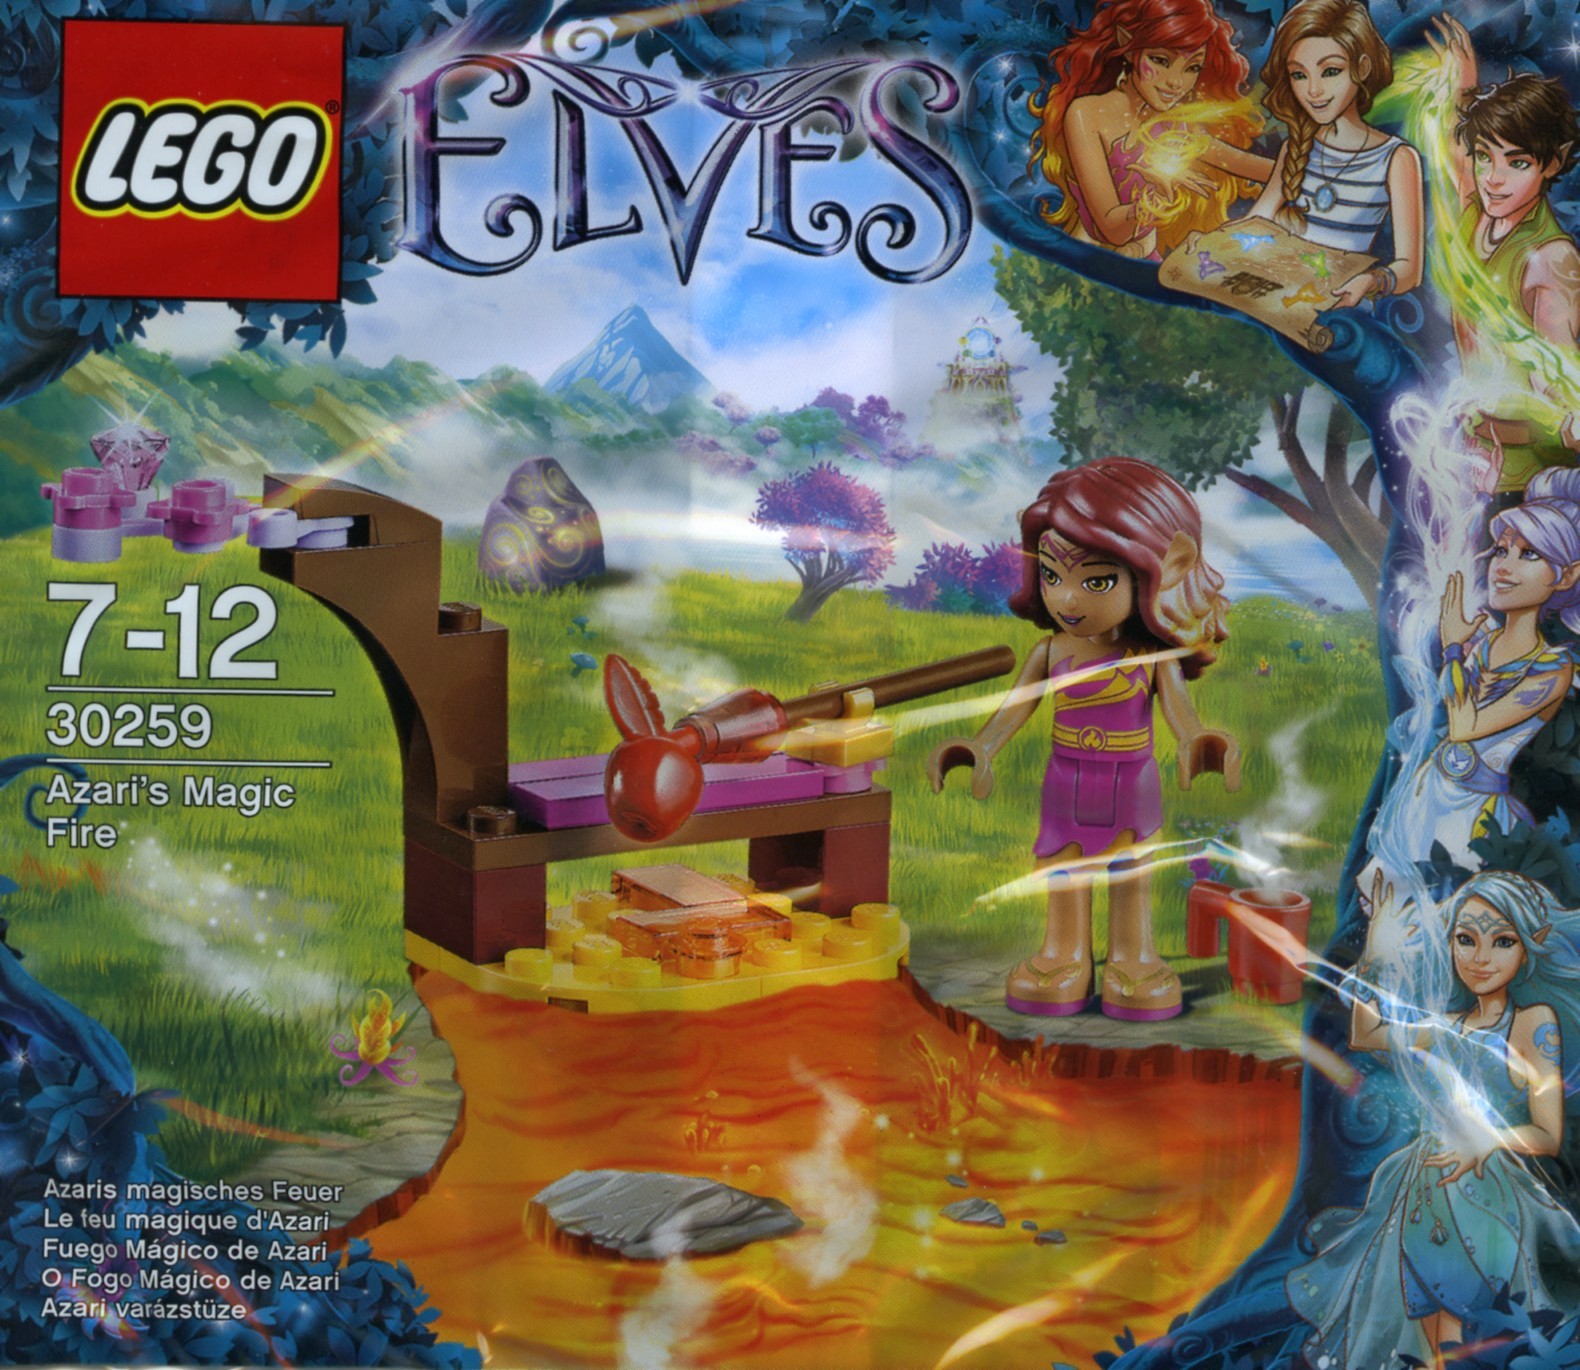 Construction & Building Toys LEGO Elves Azari's Magic Fire Playset 